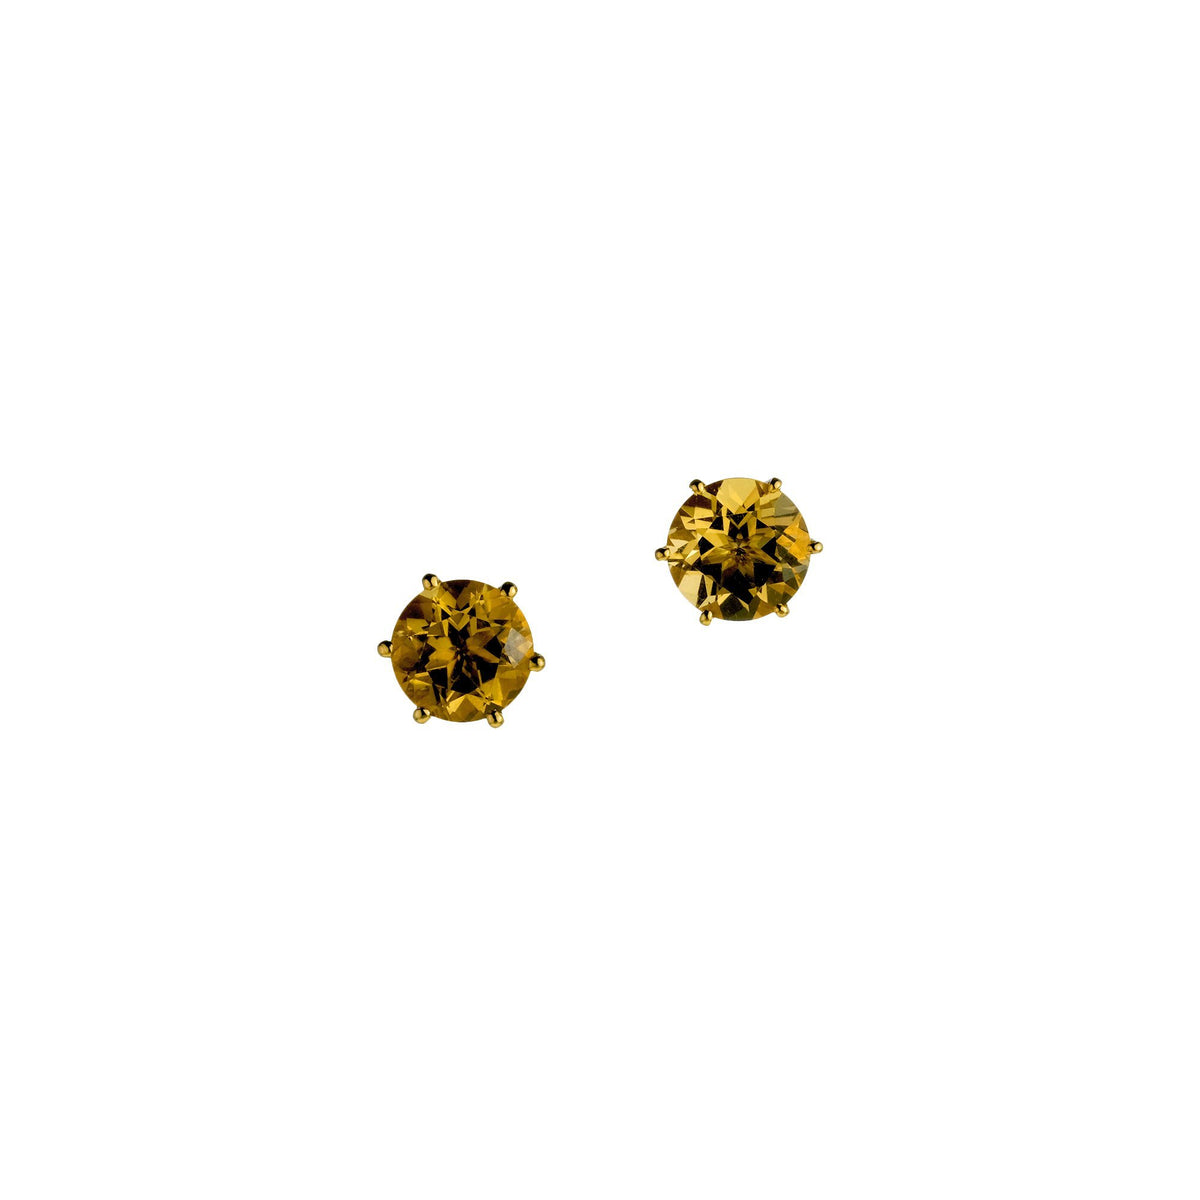 Golden Citrine Studs, 3.05 carats